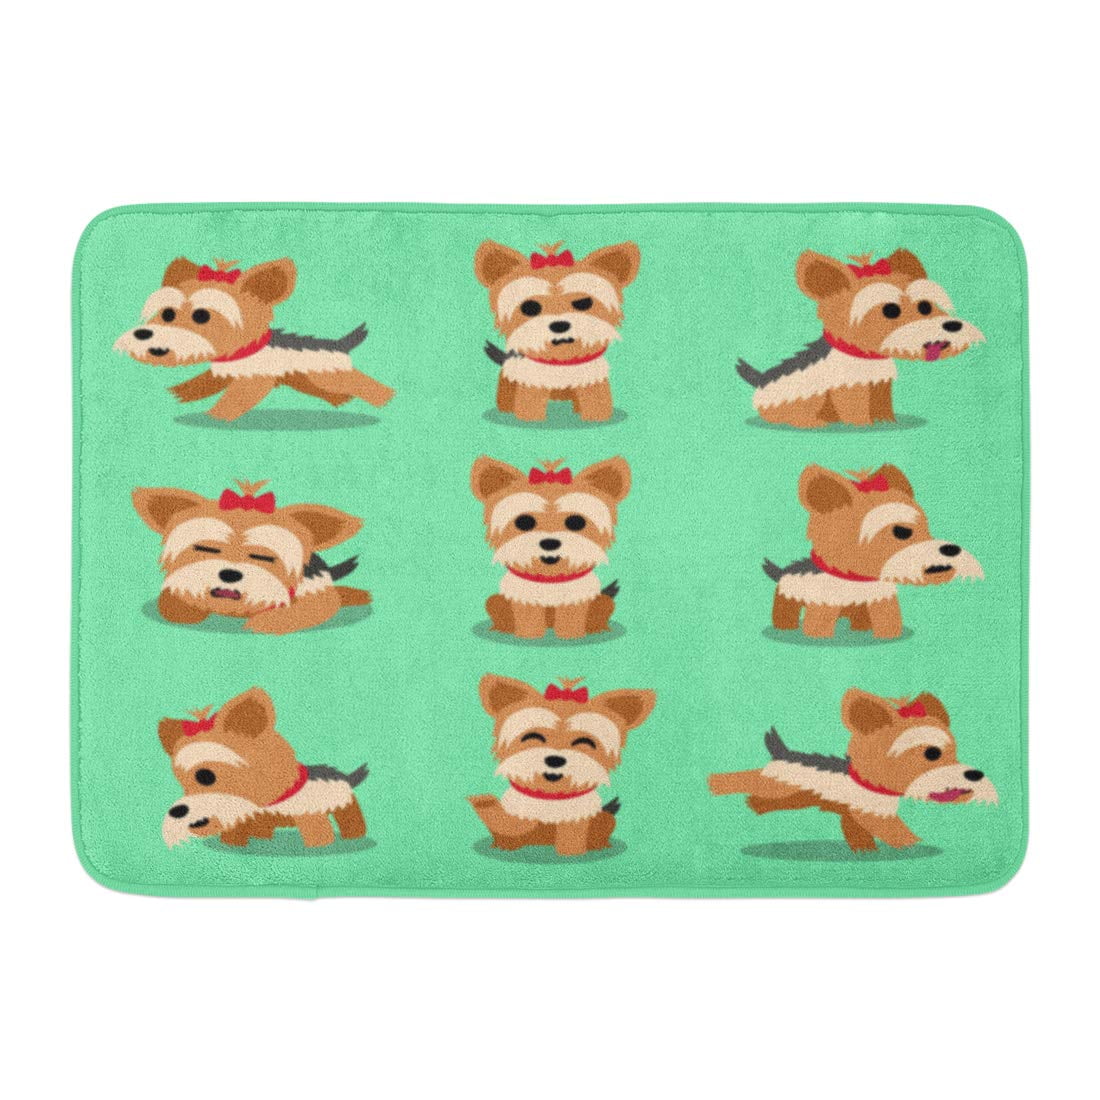 Funny Beagle Dogs Running Style Bathroom Shower Rug Warm Flannel Carpet Door Mat 